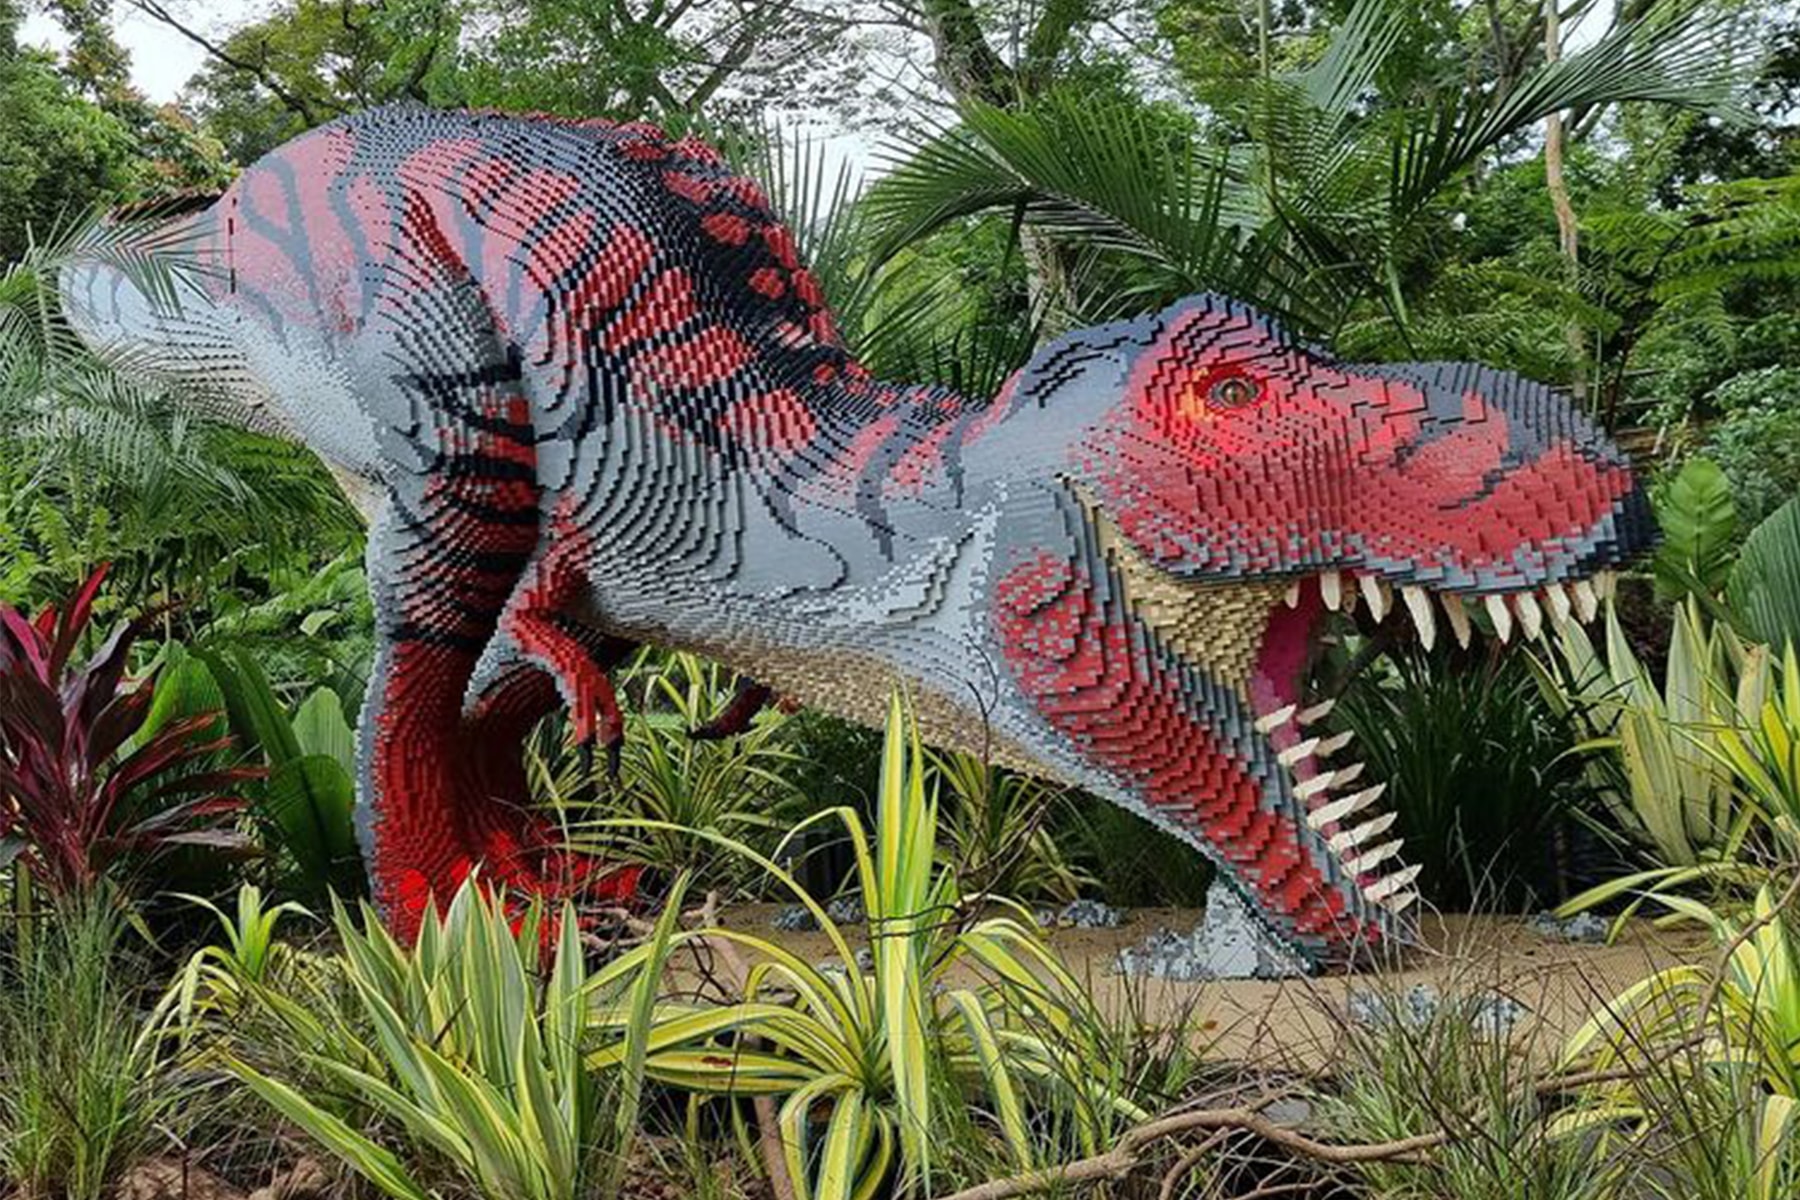 LEGO 亞洲首回《Brickosaurs World》展覽實體化 1:1 尺寸恐龍積木雕塑